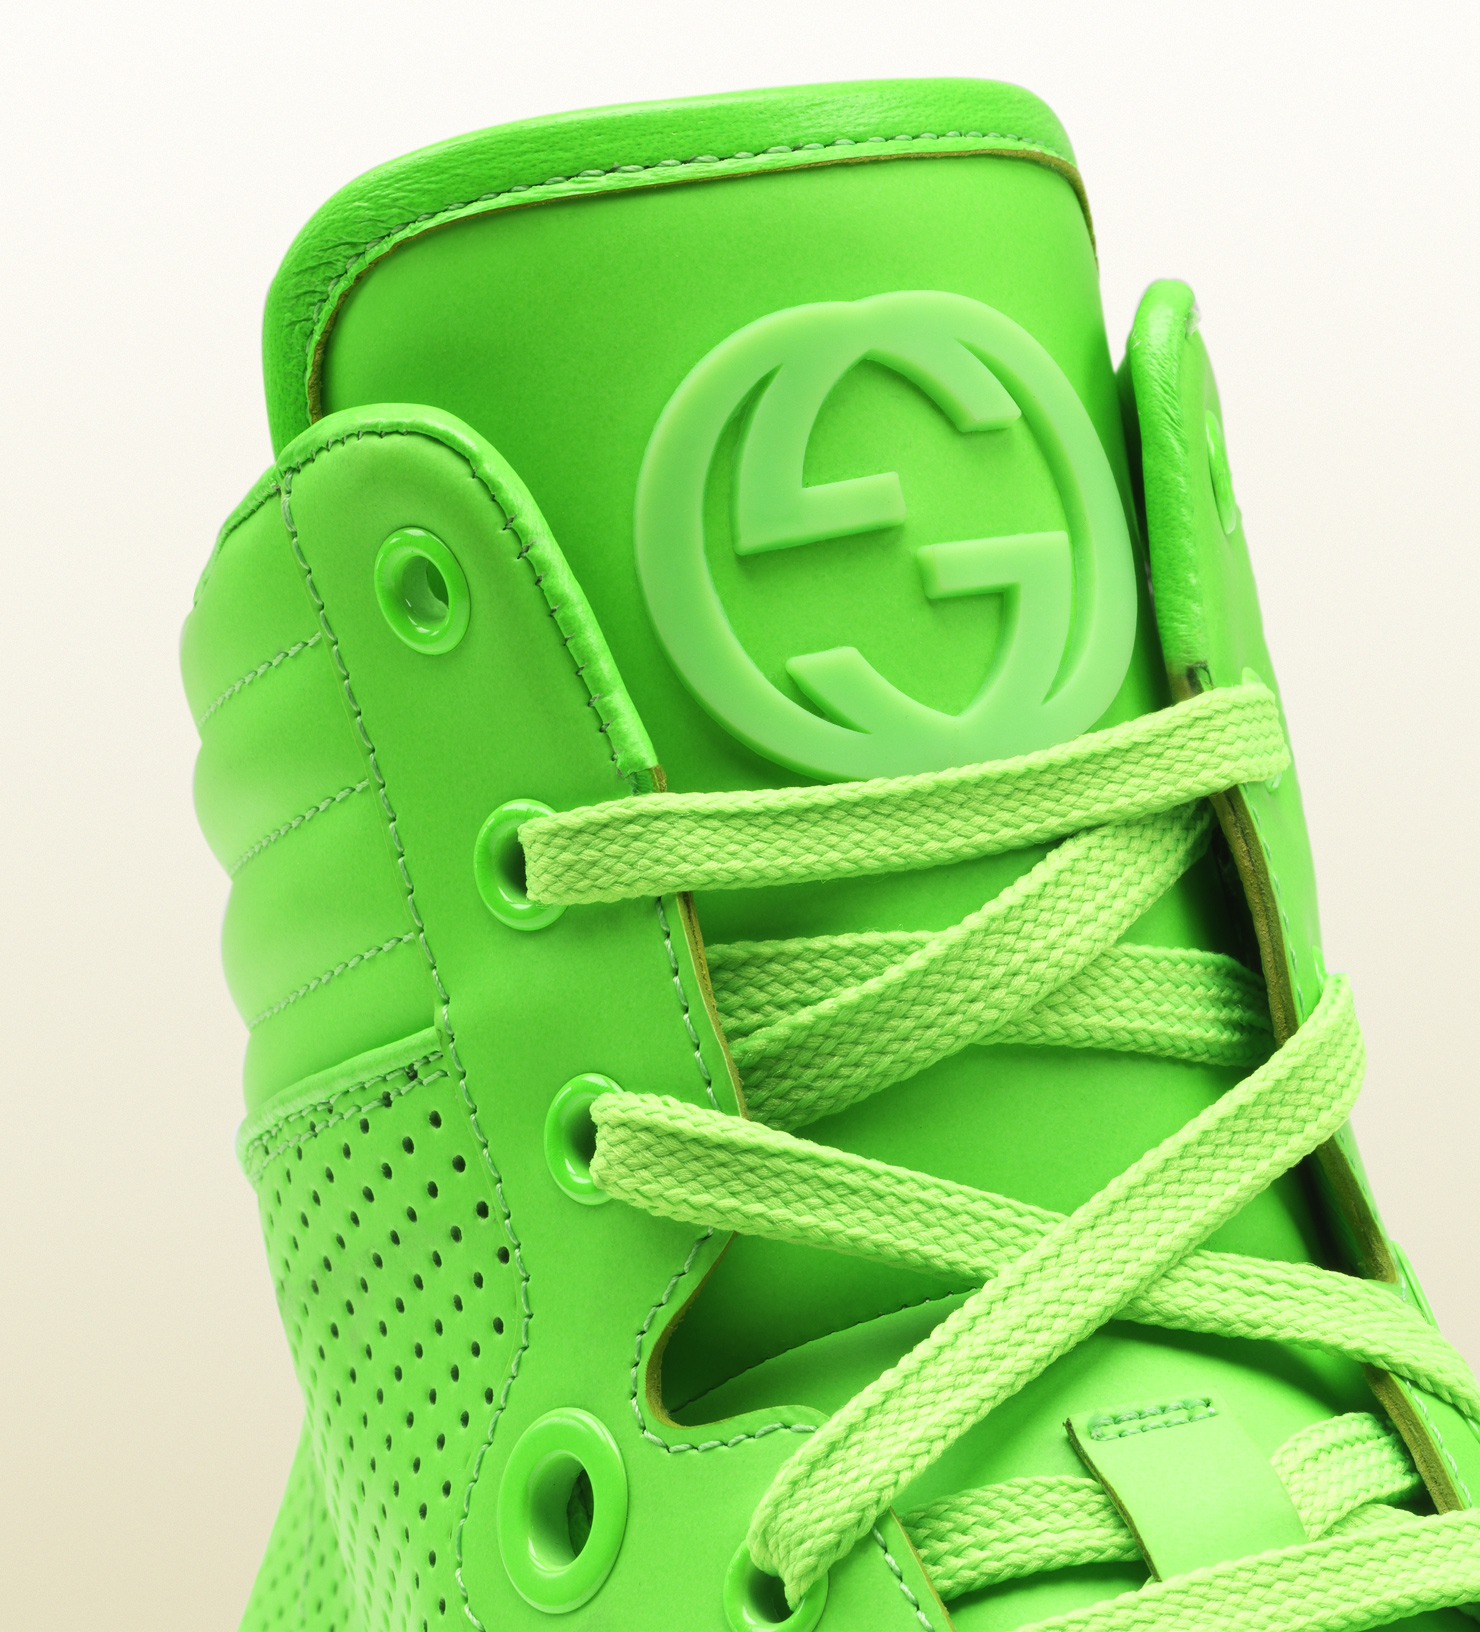 gucci neon green sneakers